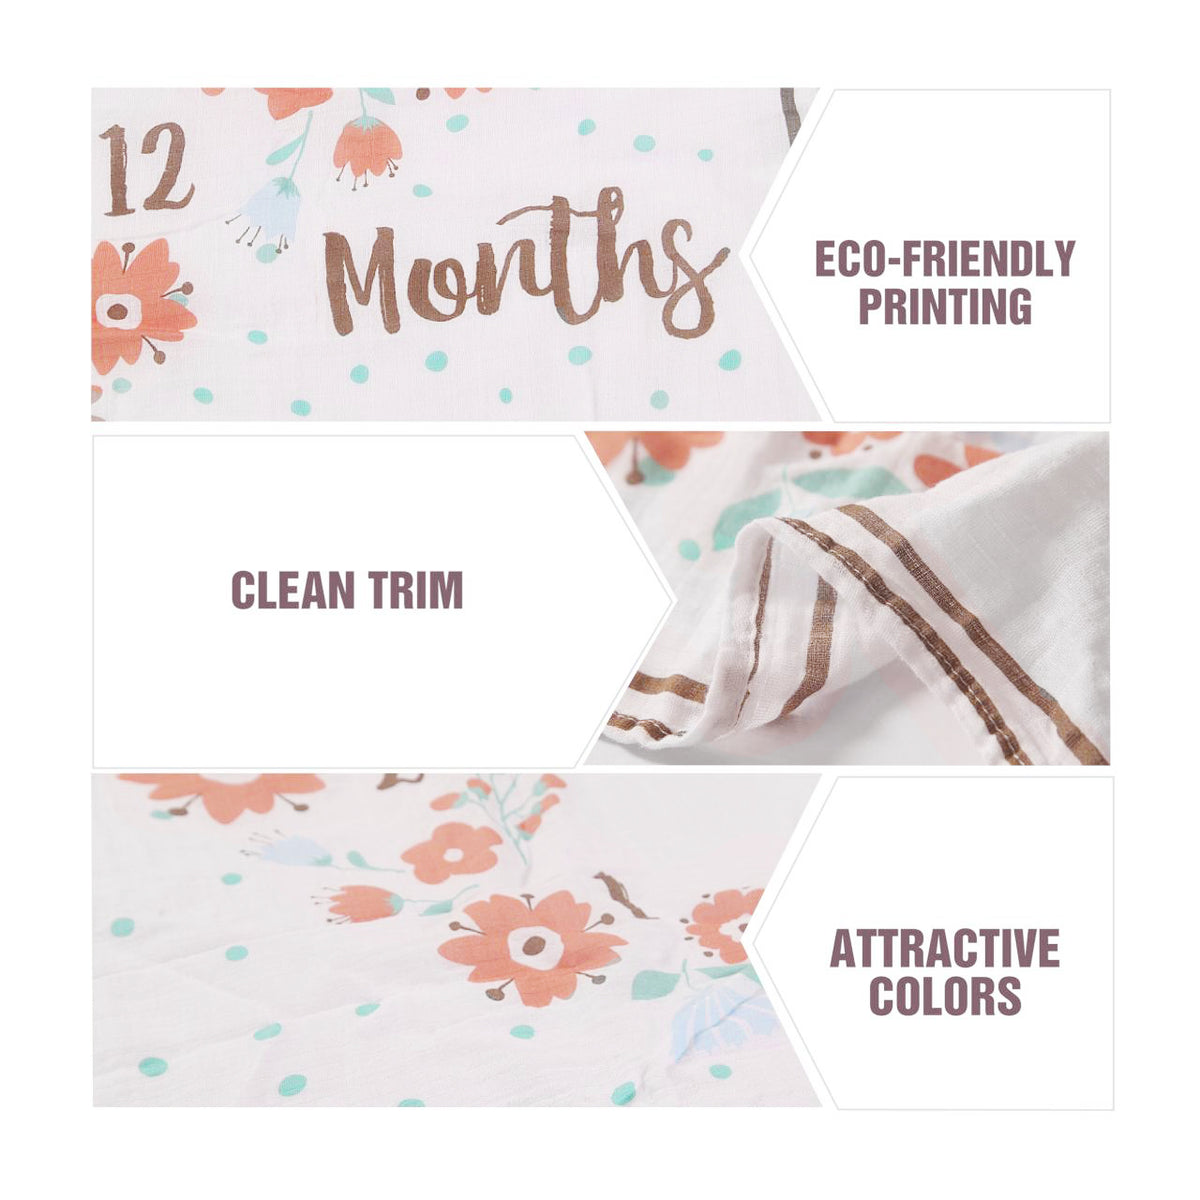 Baby Monthly Milestone Muslin Blanket (Florals)